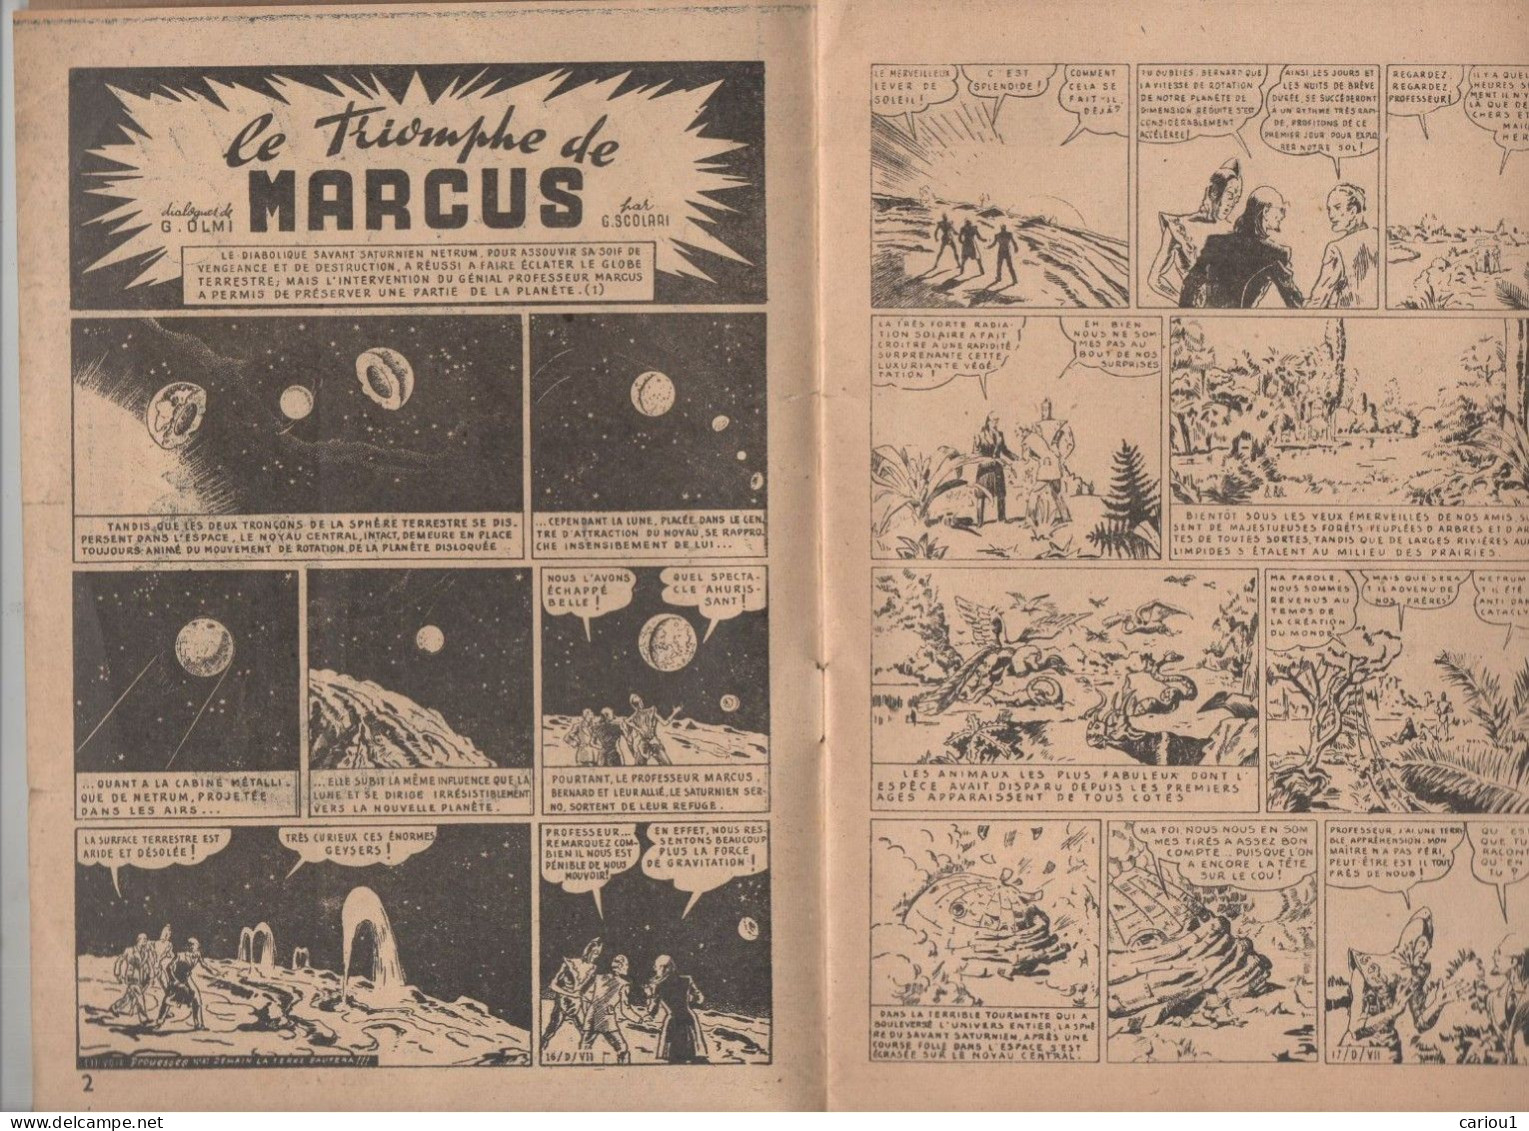 C1 SCOLARI Triomphe Marcus SELECTIONS PROUESSES # 2 1948 Saturne Contre Terre SF Port Inclus France - Before 1950